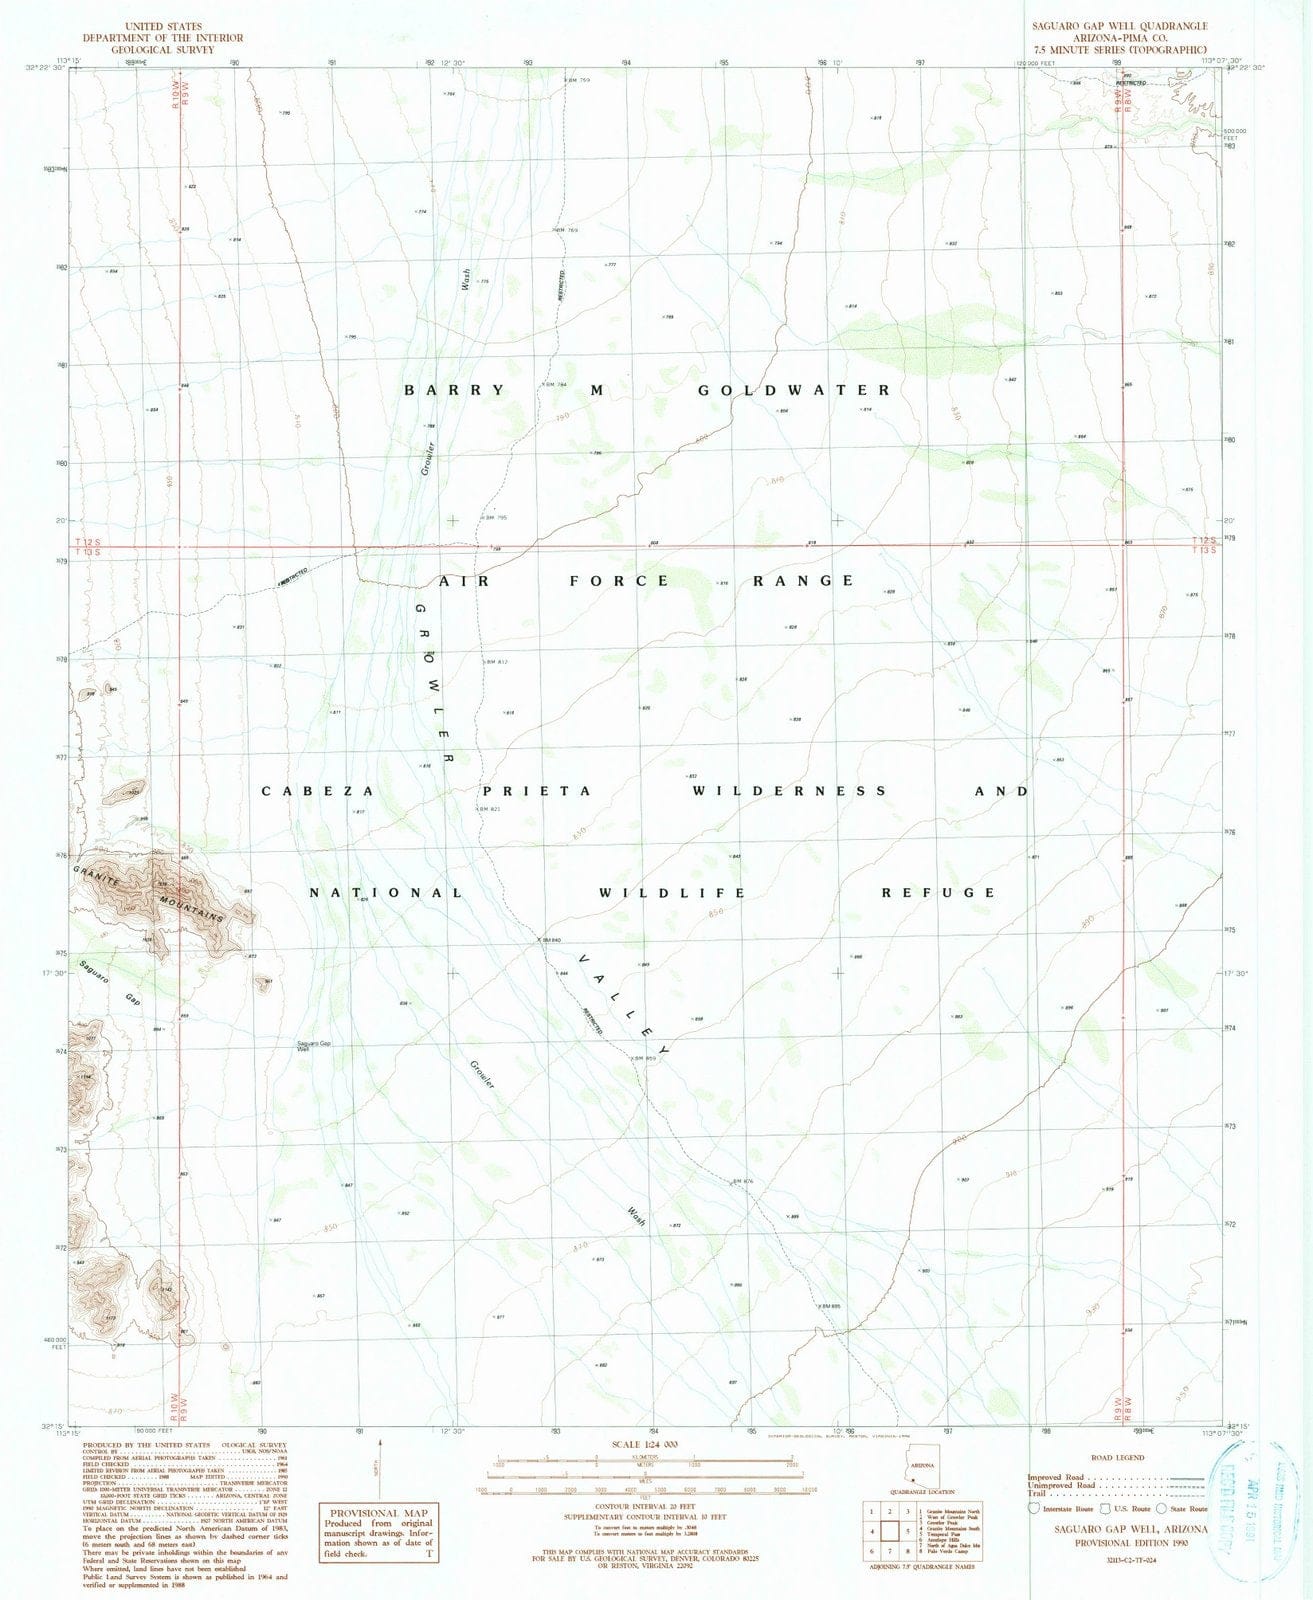 1990 Saguaro Gap Well, AZ - Arizona - USGS Topographic Map